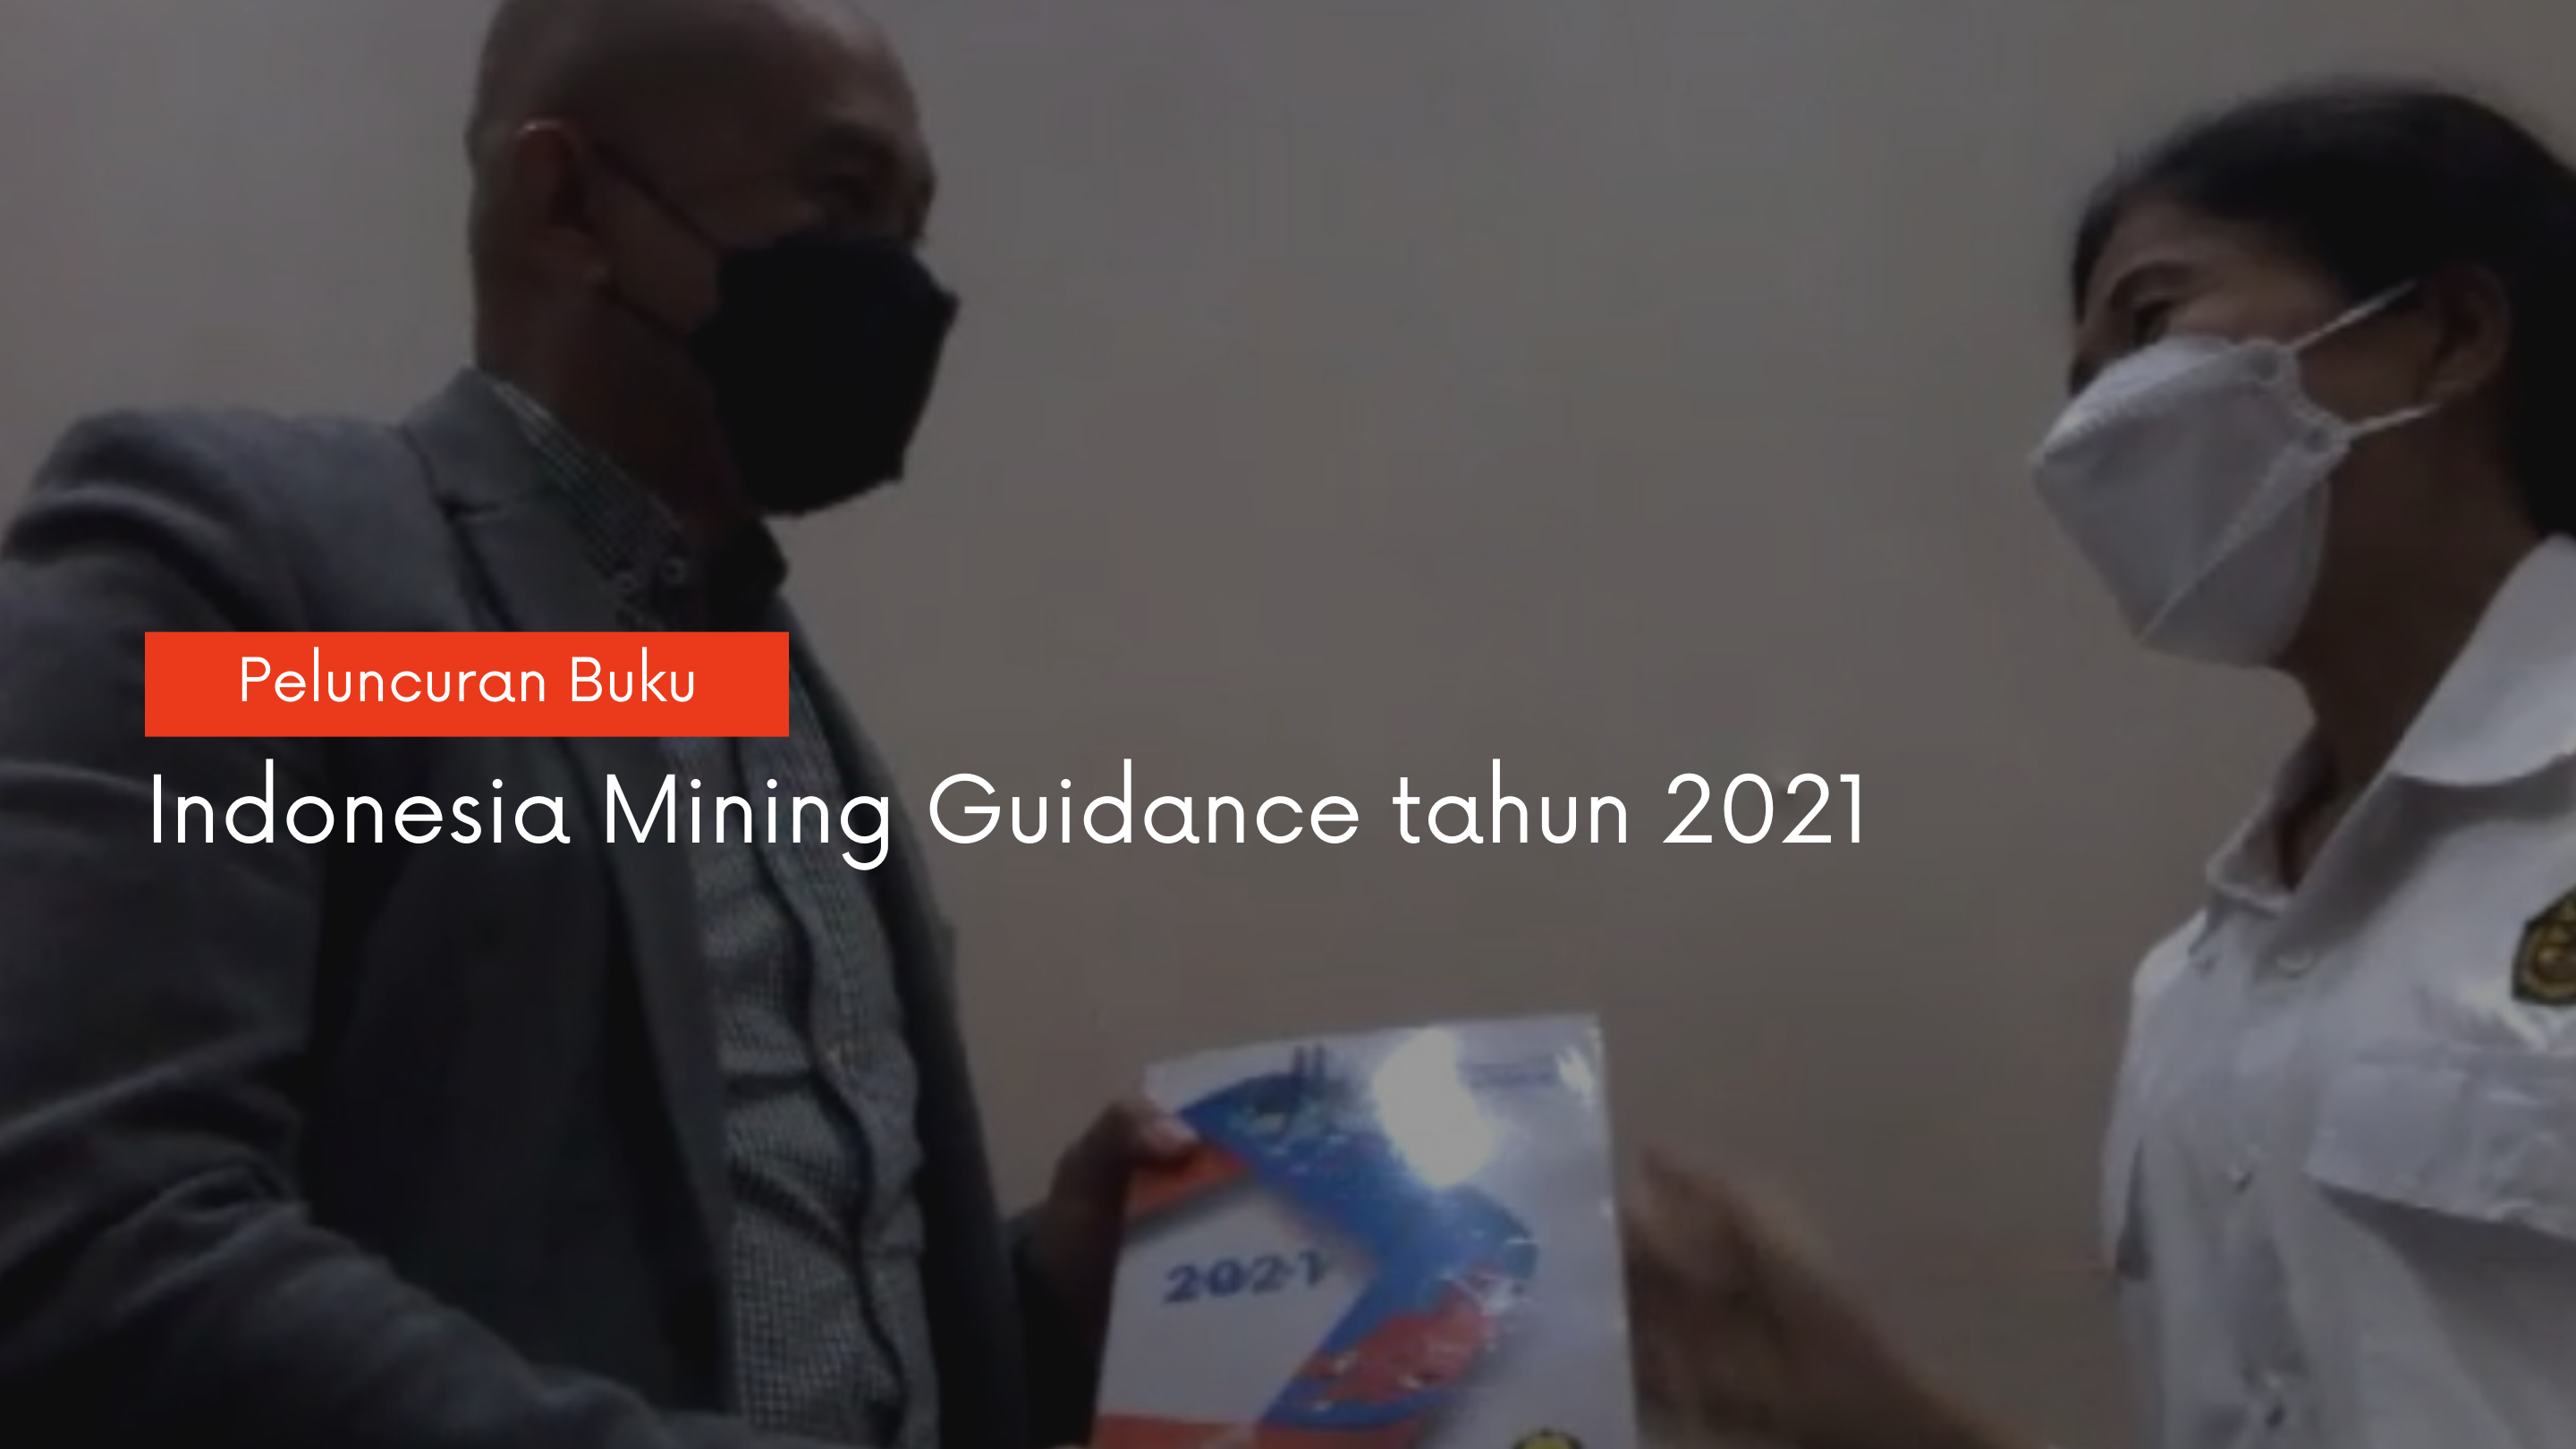 Ditjen Minerba telah meluncurkan buku Indonesia Mining Guidance tahun 2021